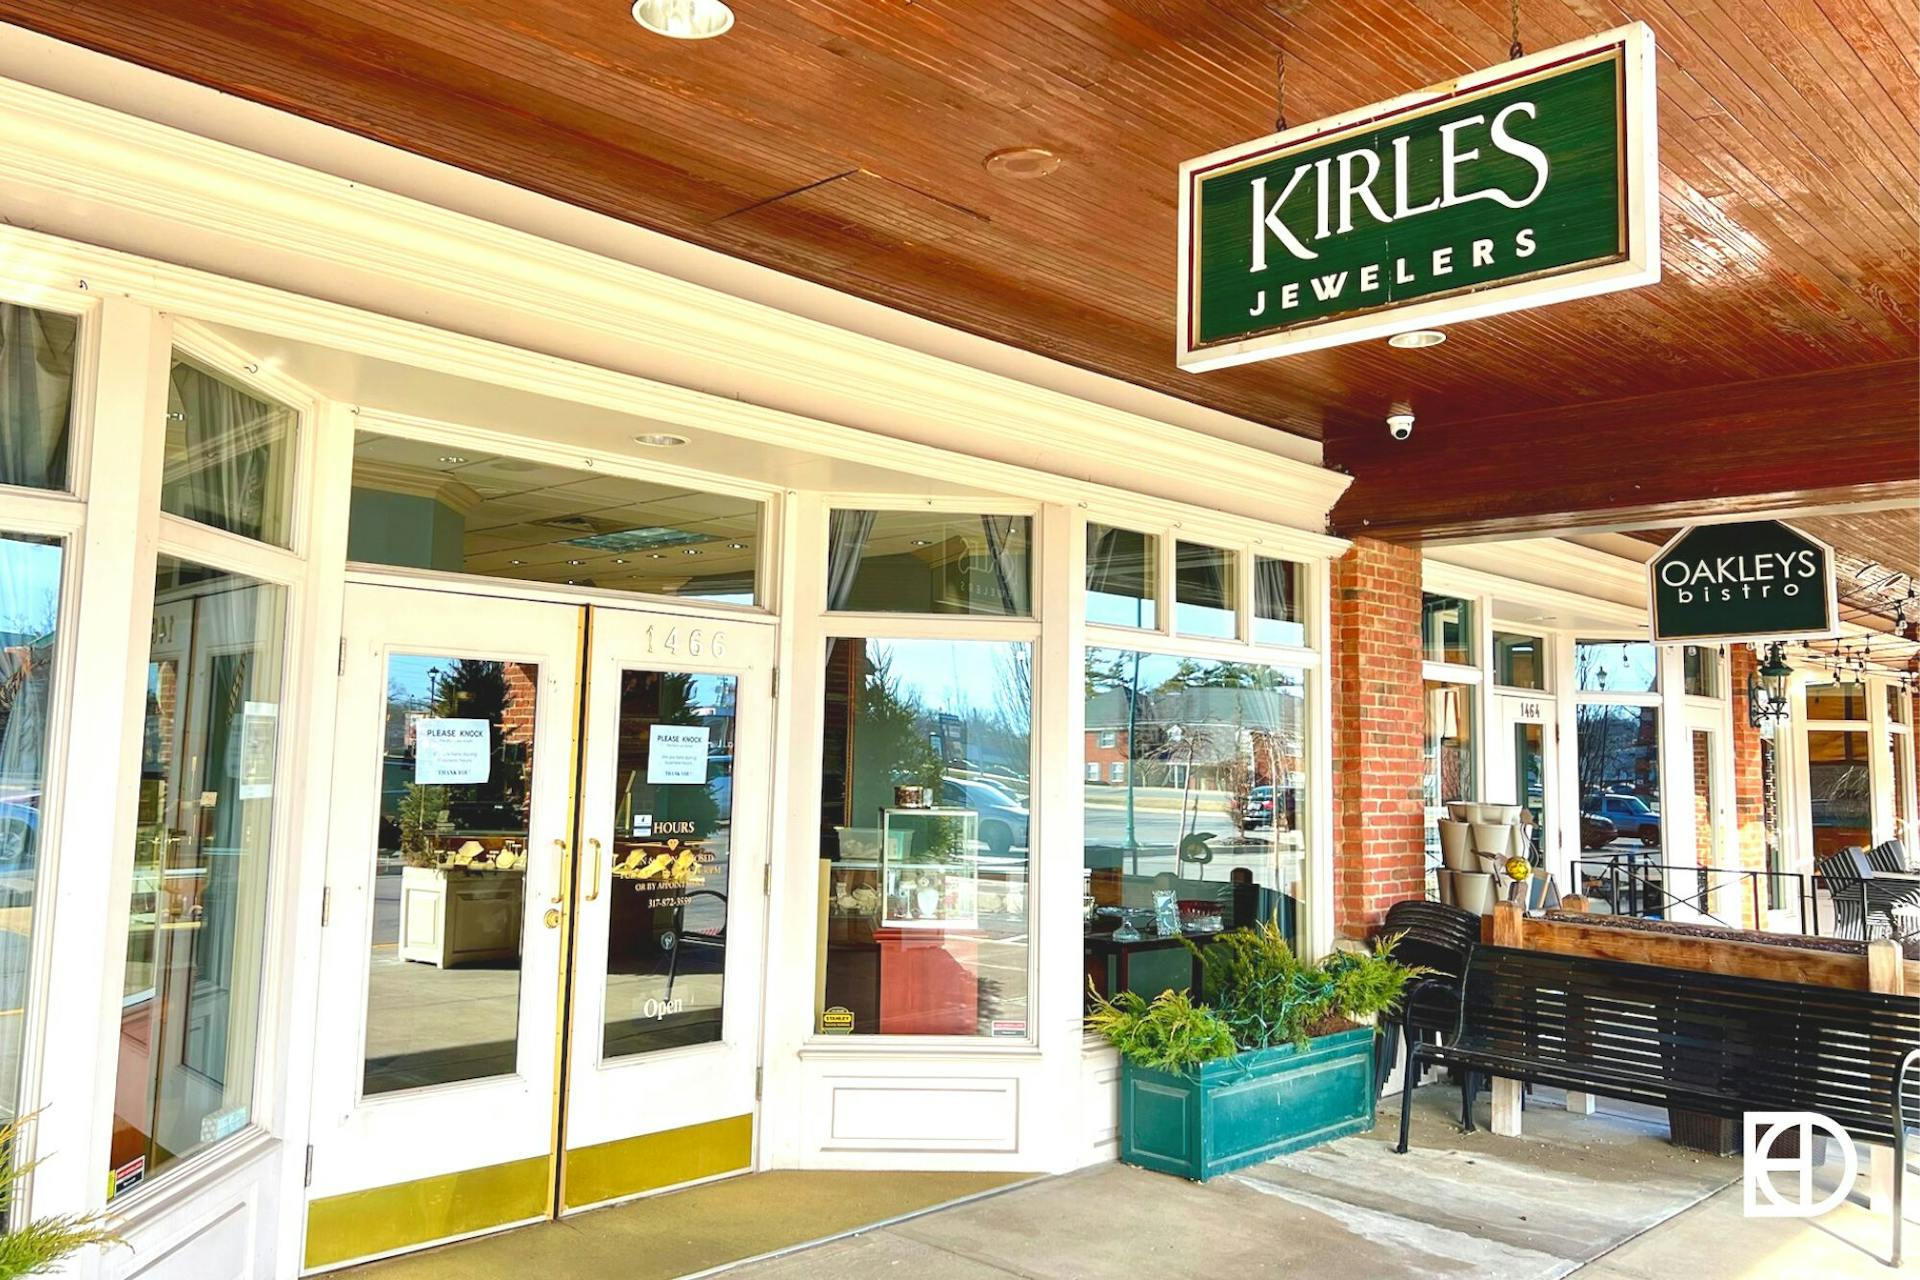 Photo of exterior of Kirles Jewelers